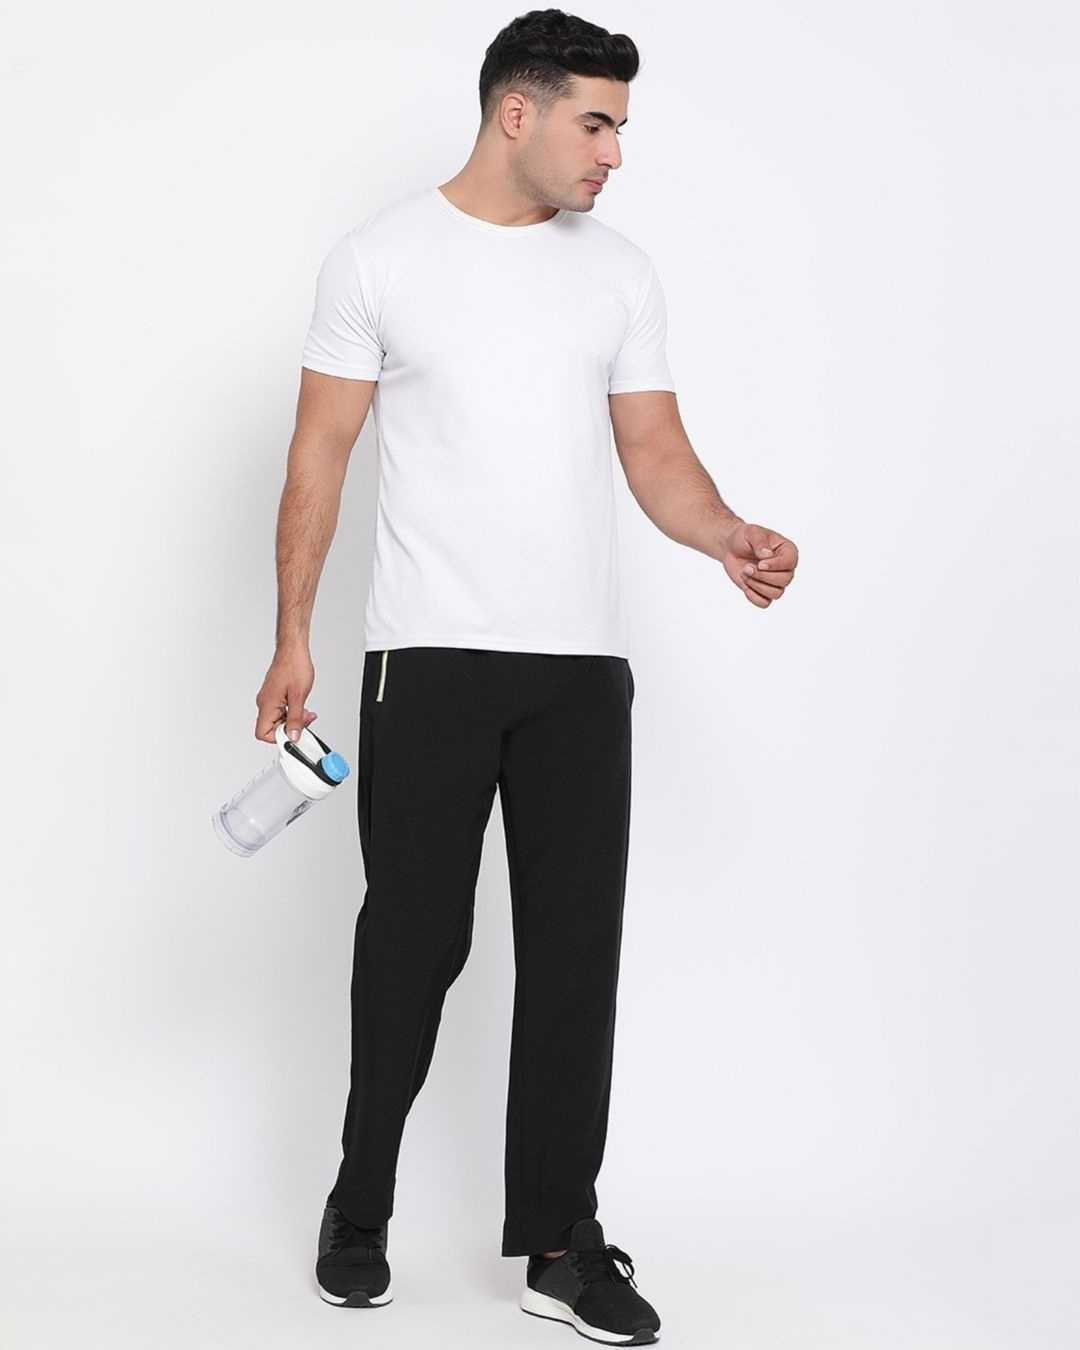 Starter Reflective Athletic Sweat Pants for Men | Mercari